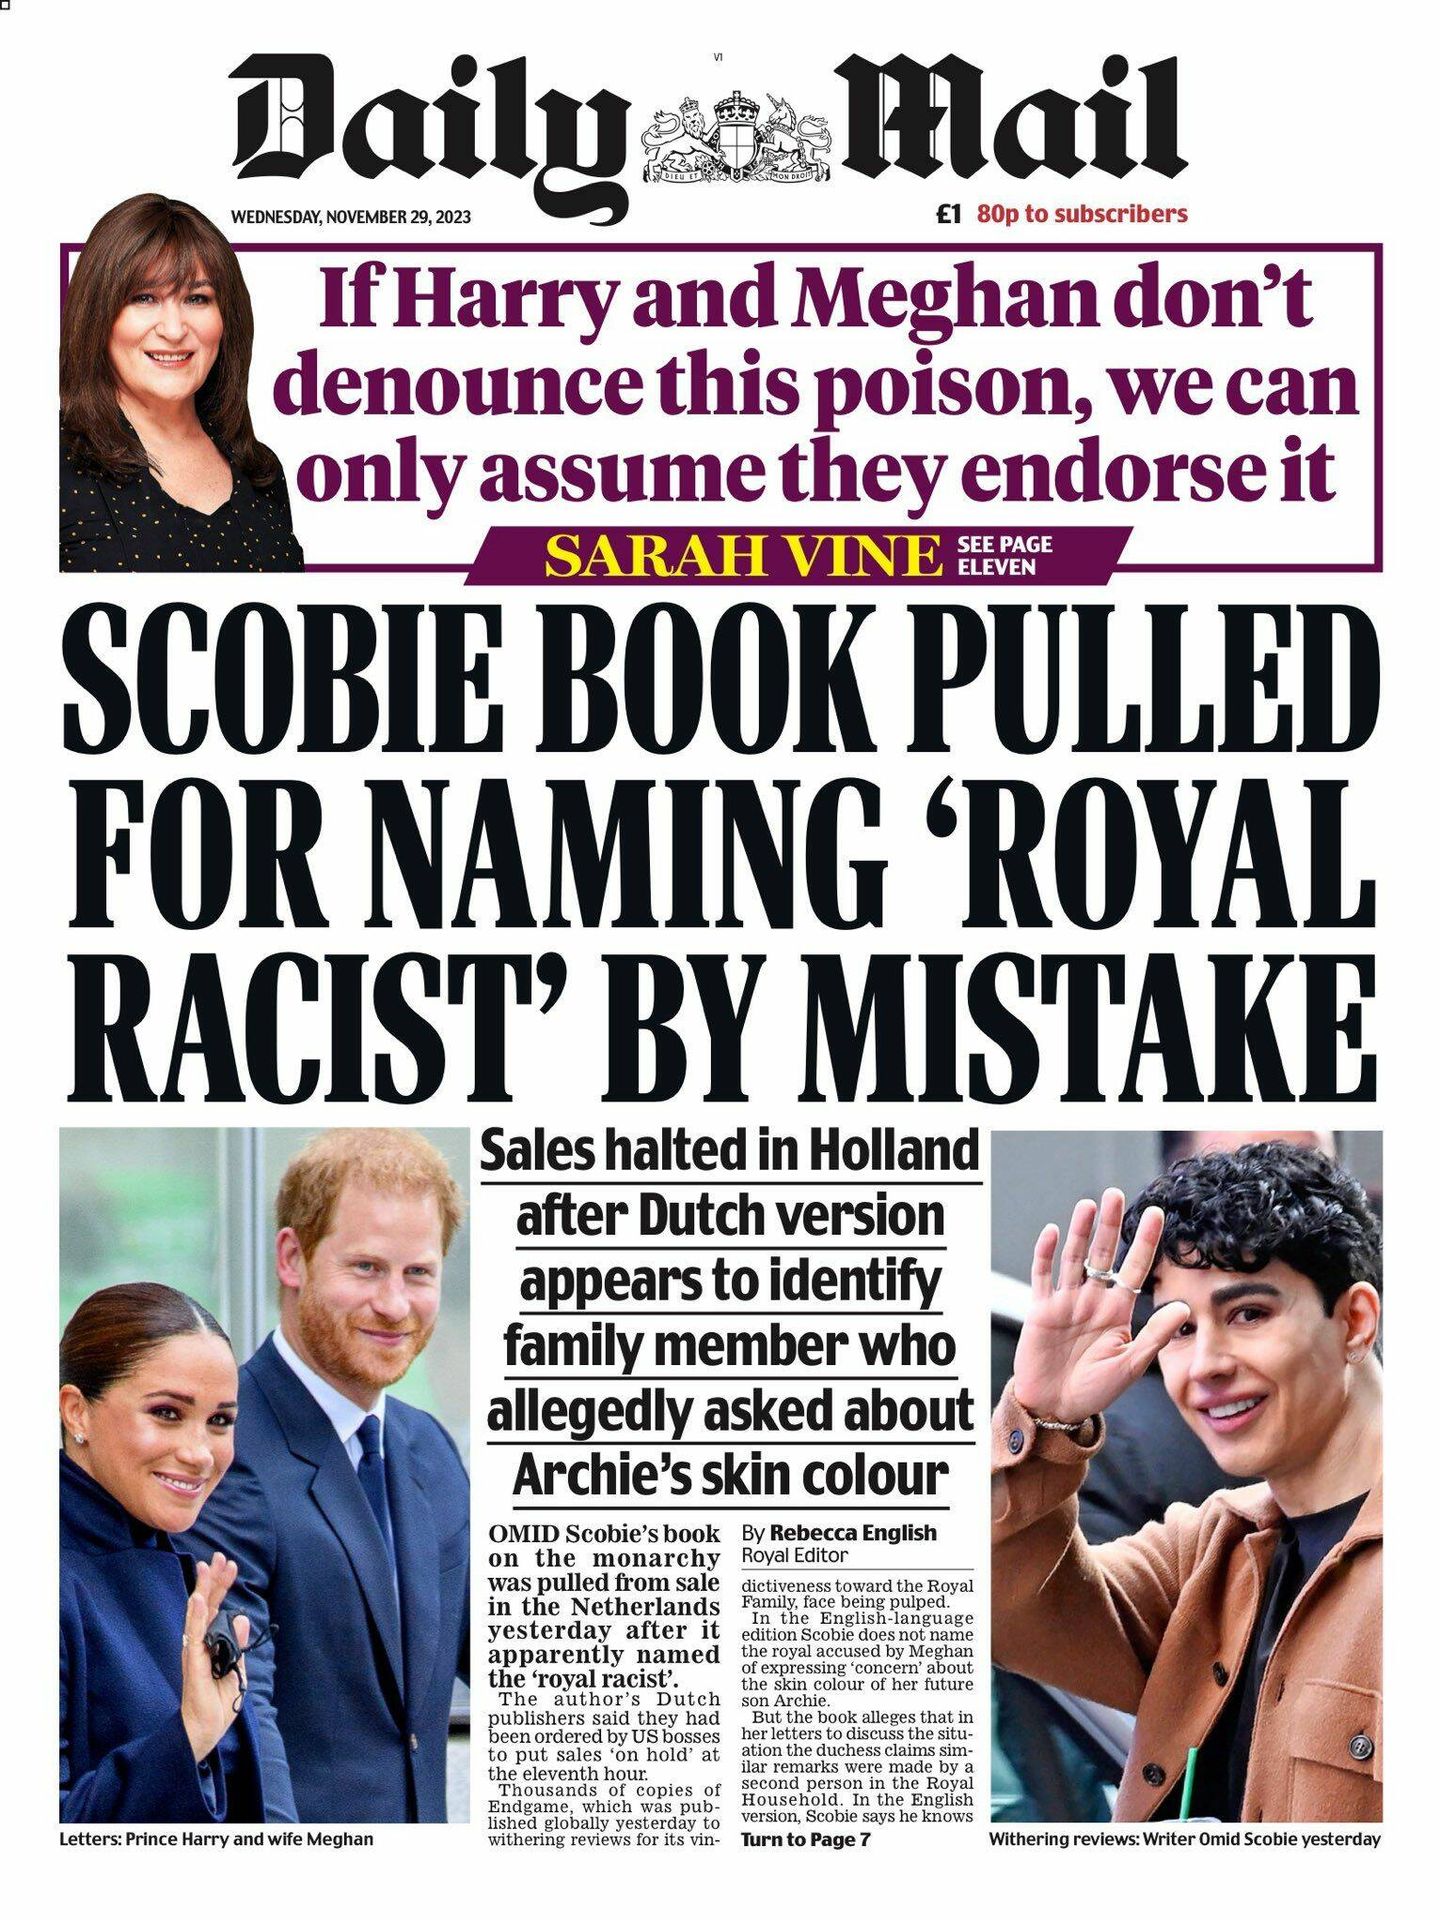 La polémica sobre el racismo en la portada del 'Daily Mail'.